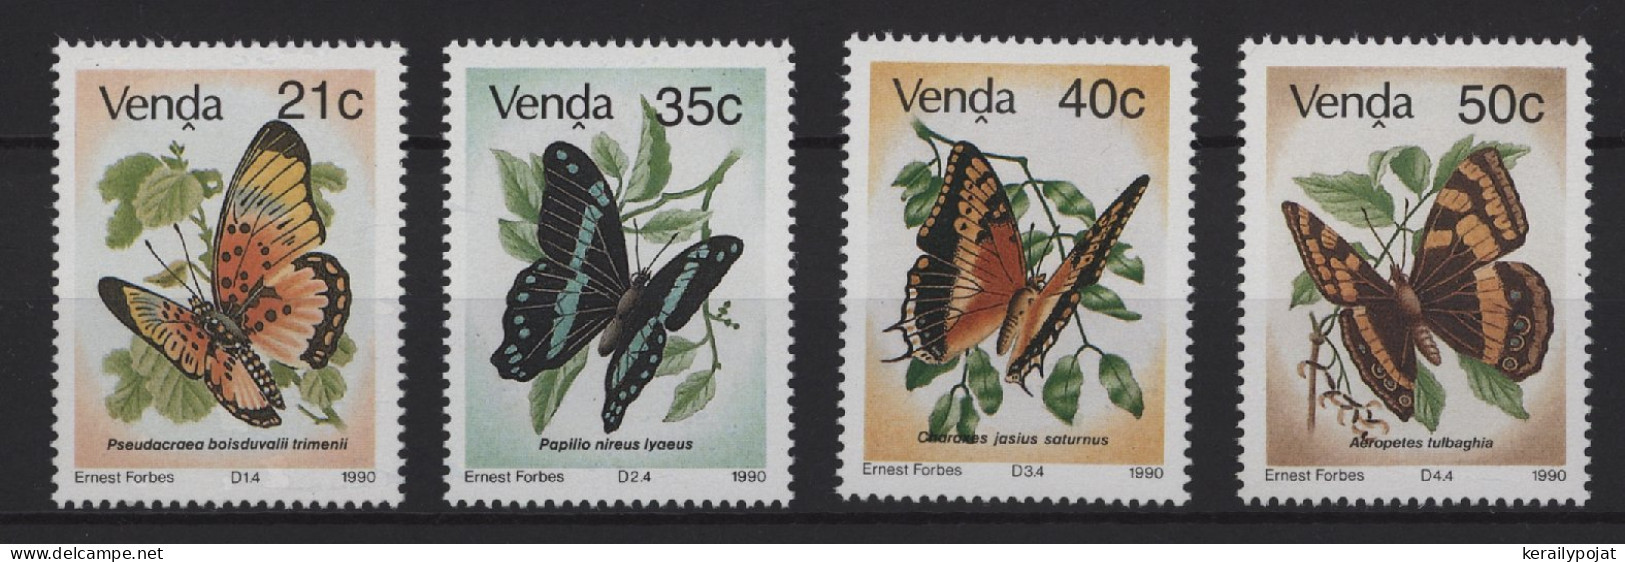 Venda - 1990 Butterflies MNH__(TH-27319) - Venda